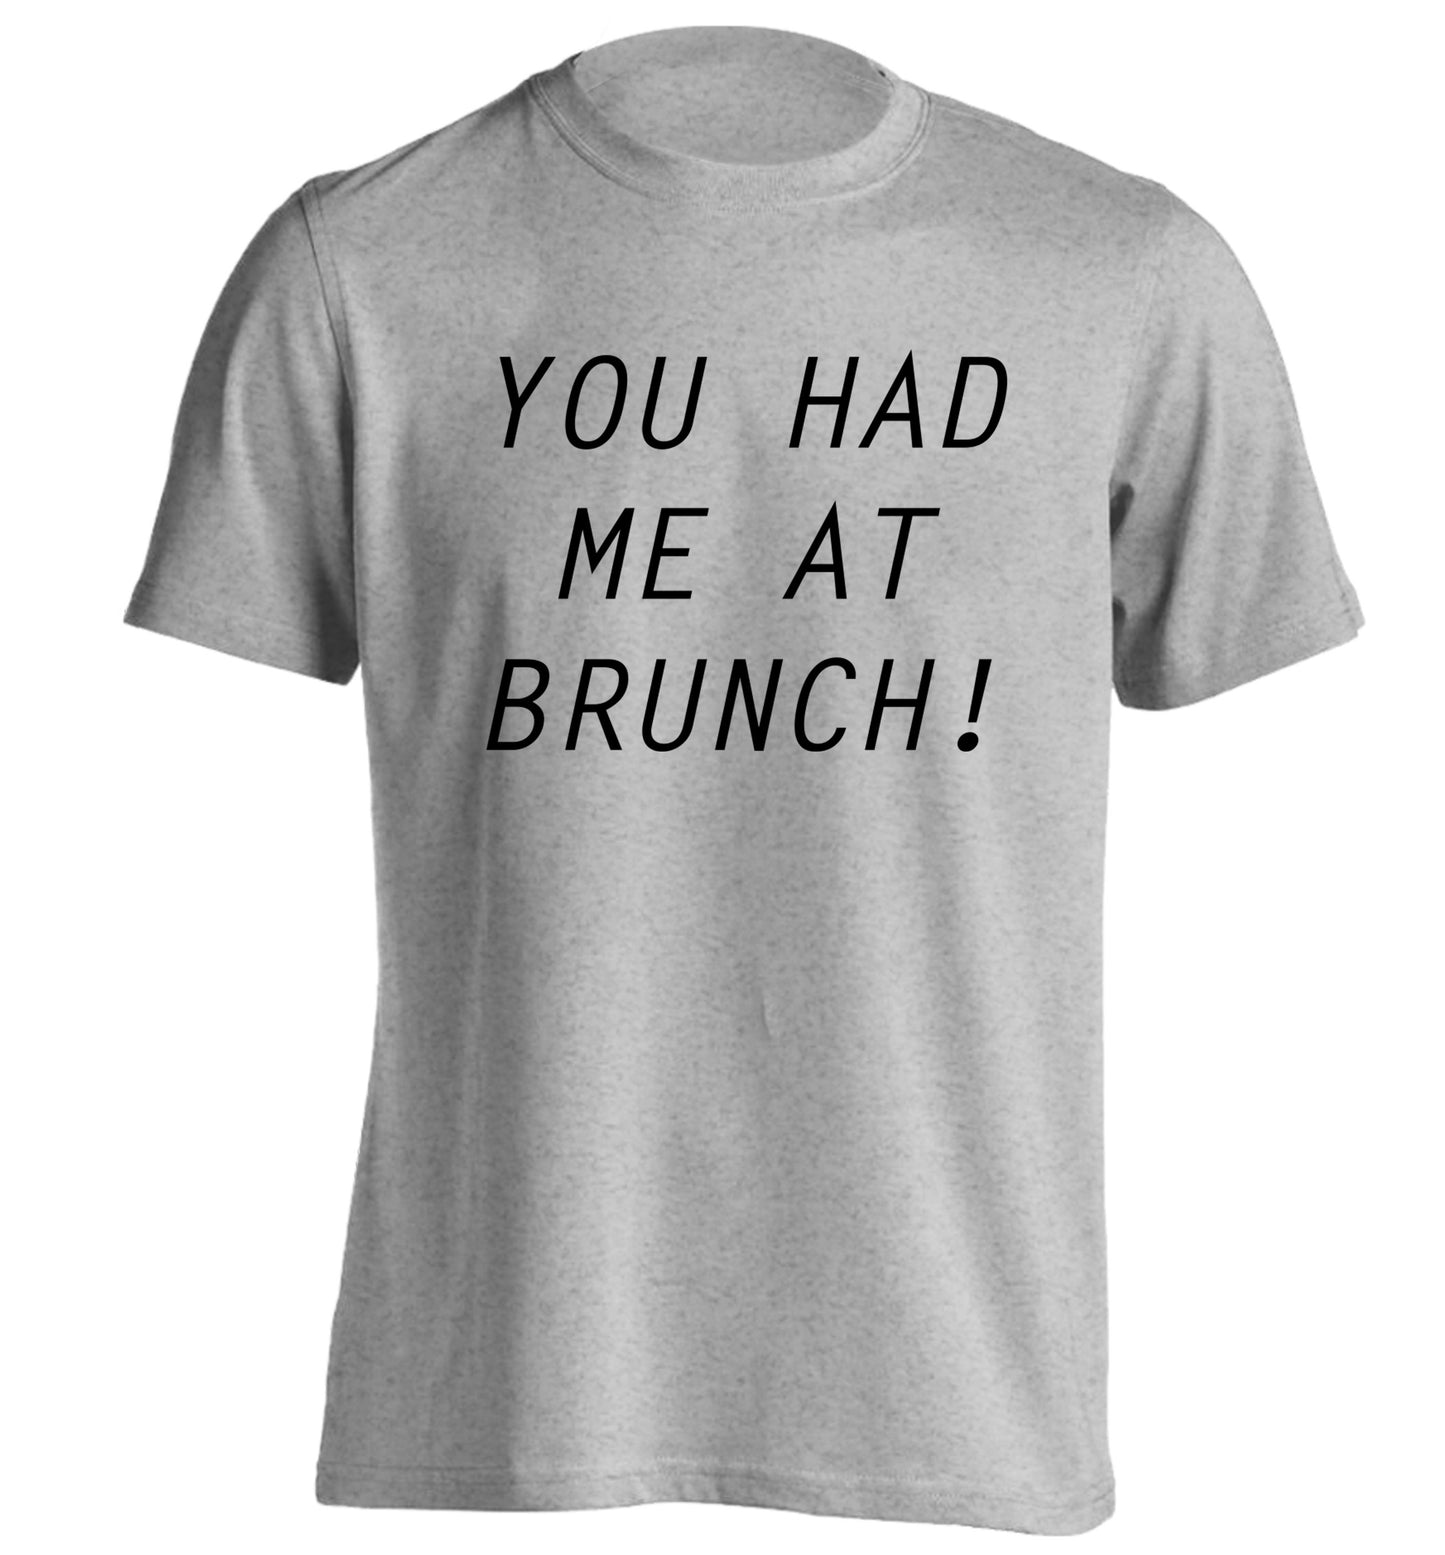 You had me at brunch adults unisex grey Tshirt 2XL